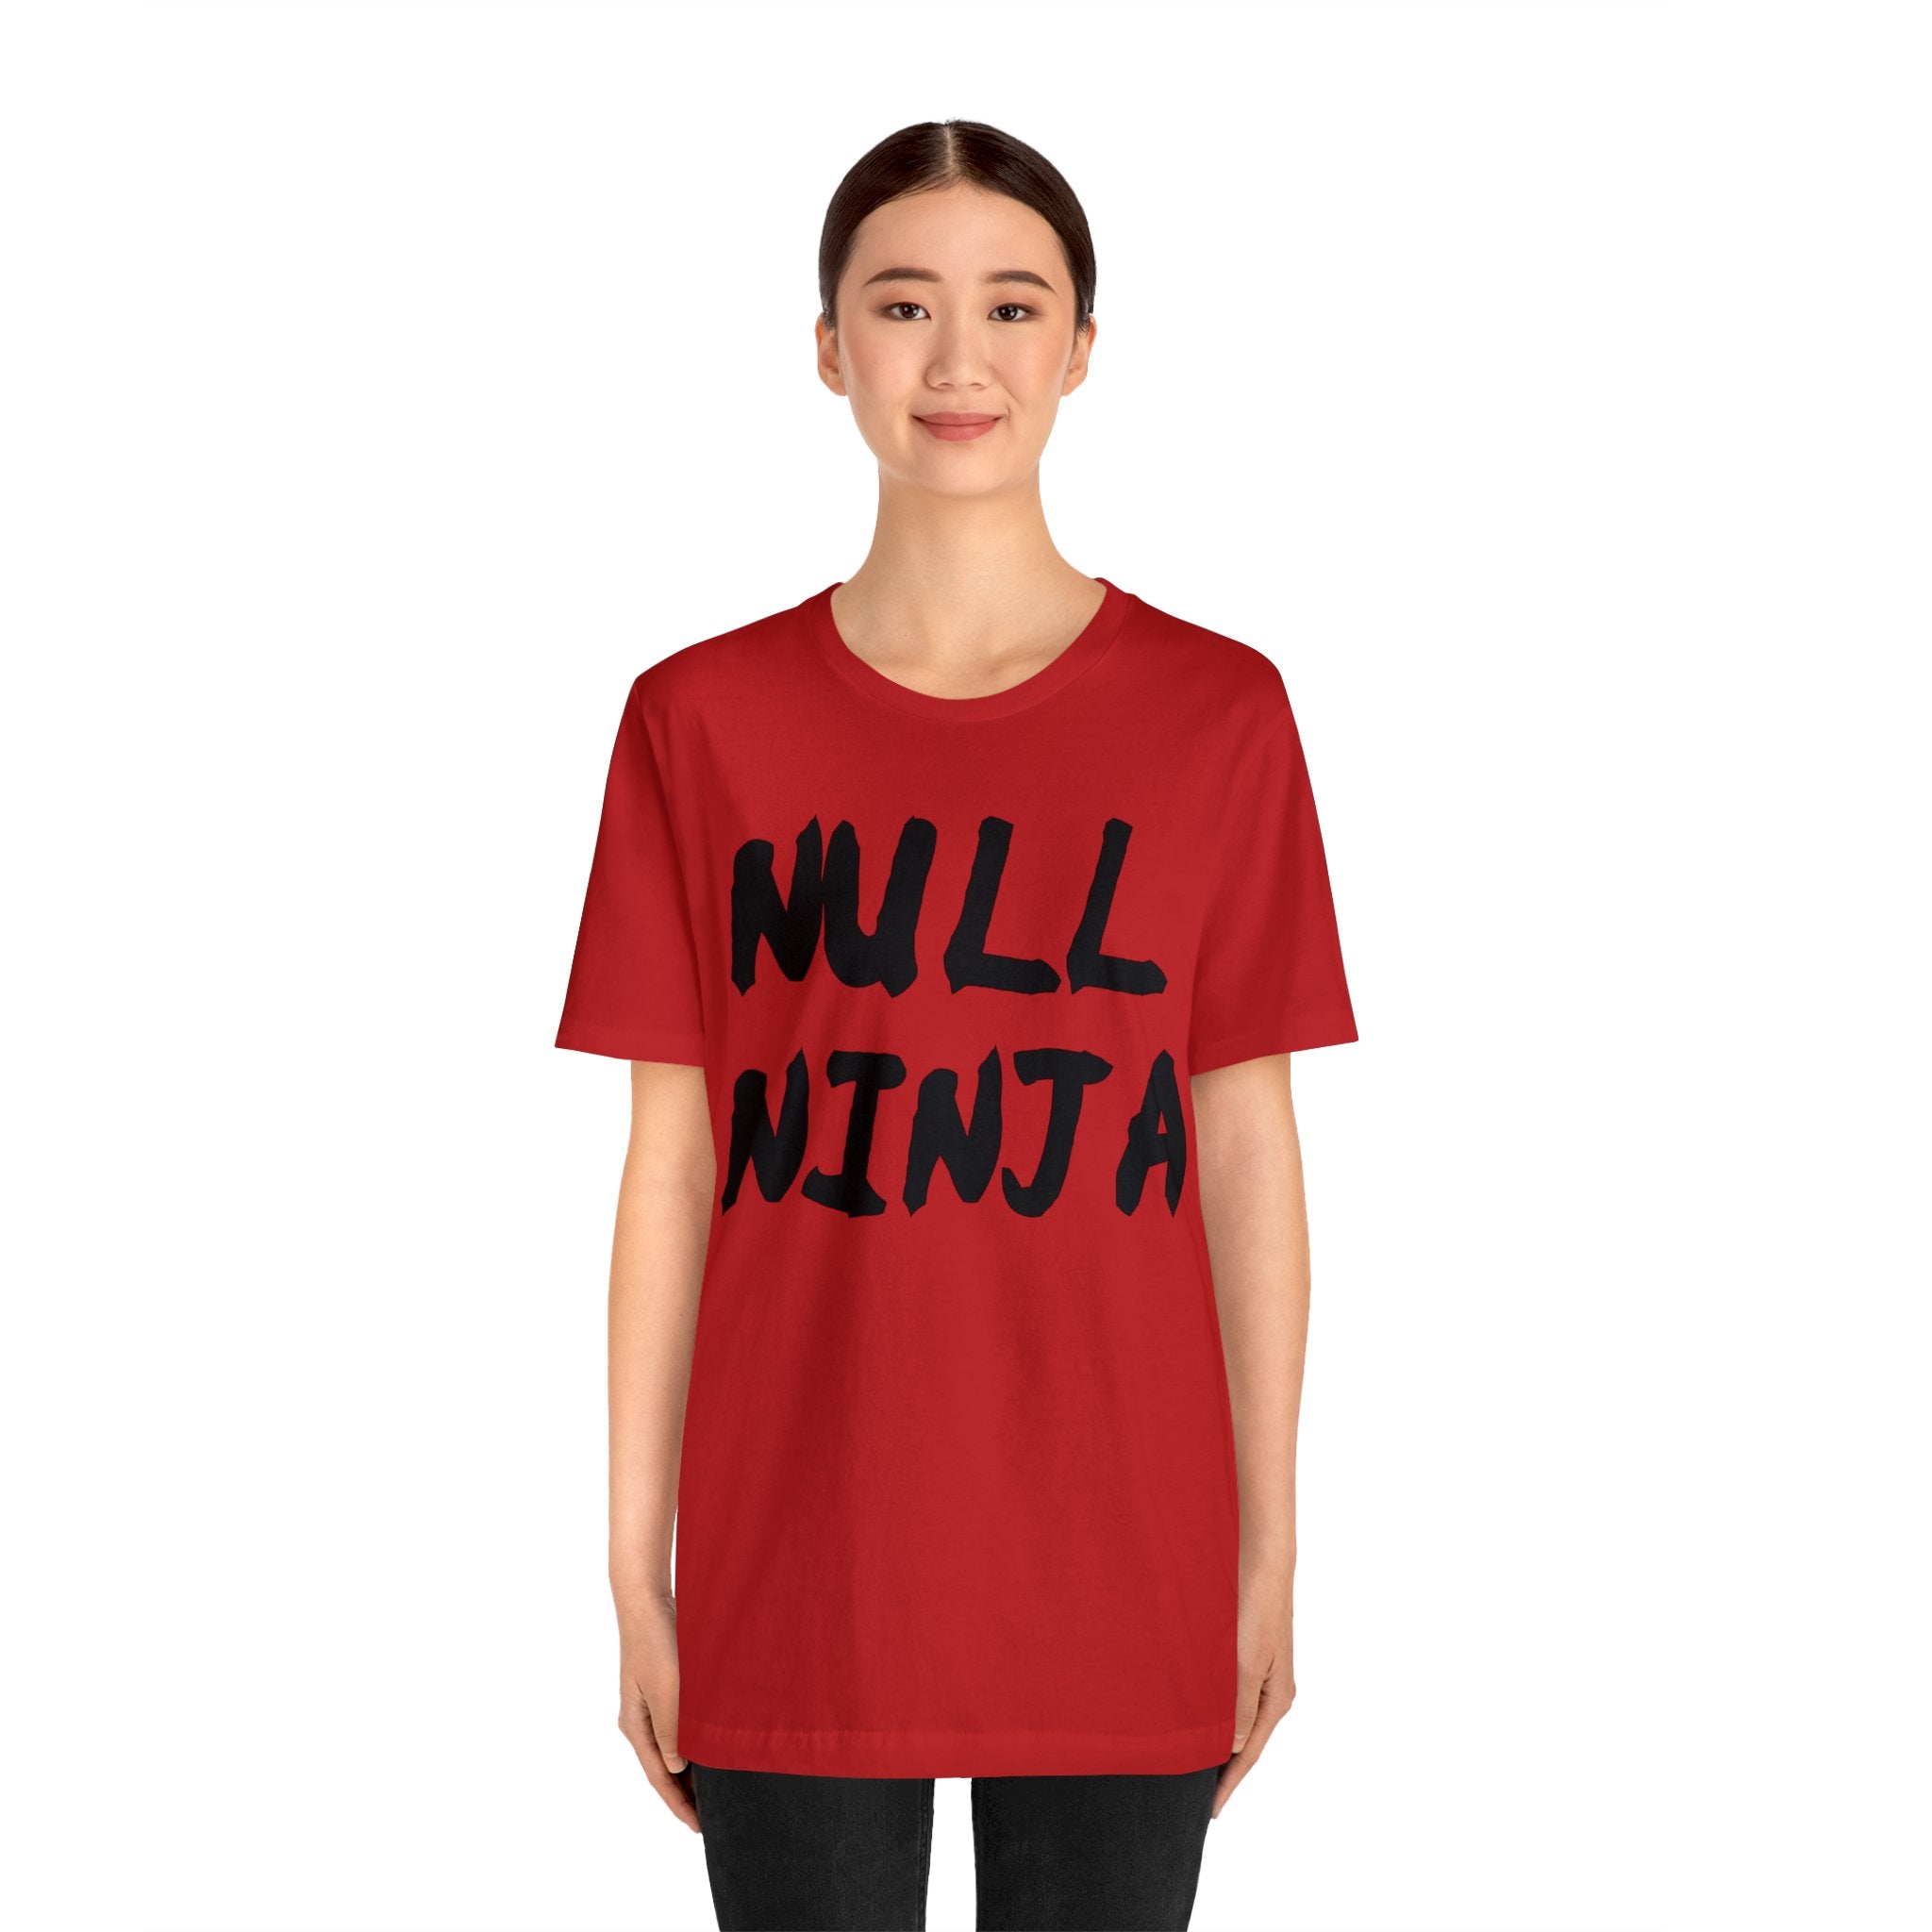 Null Ninja Tee Shirt